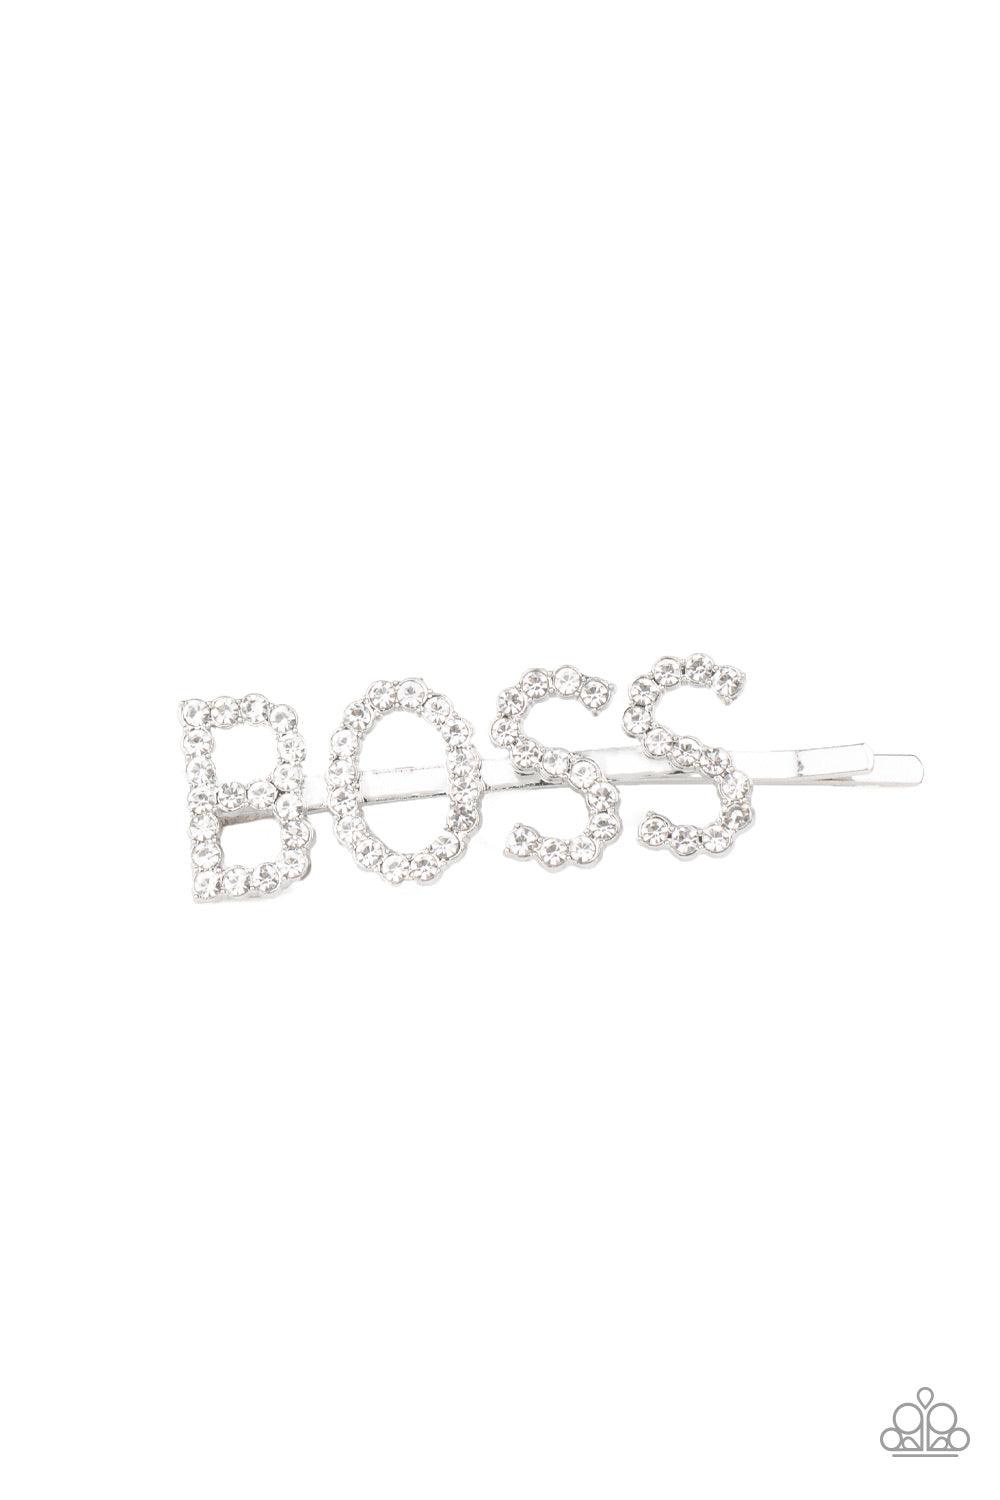 Yas Boss! ~White - Beautifully Blinged